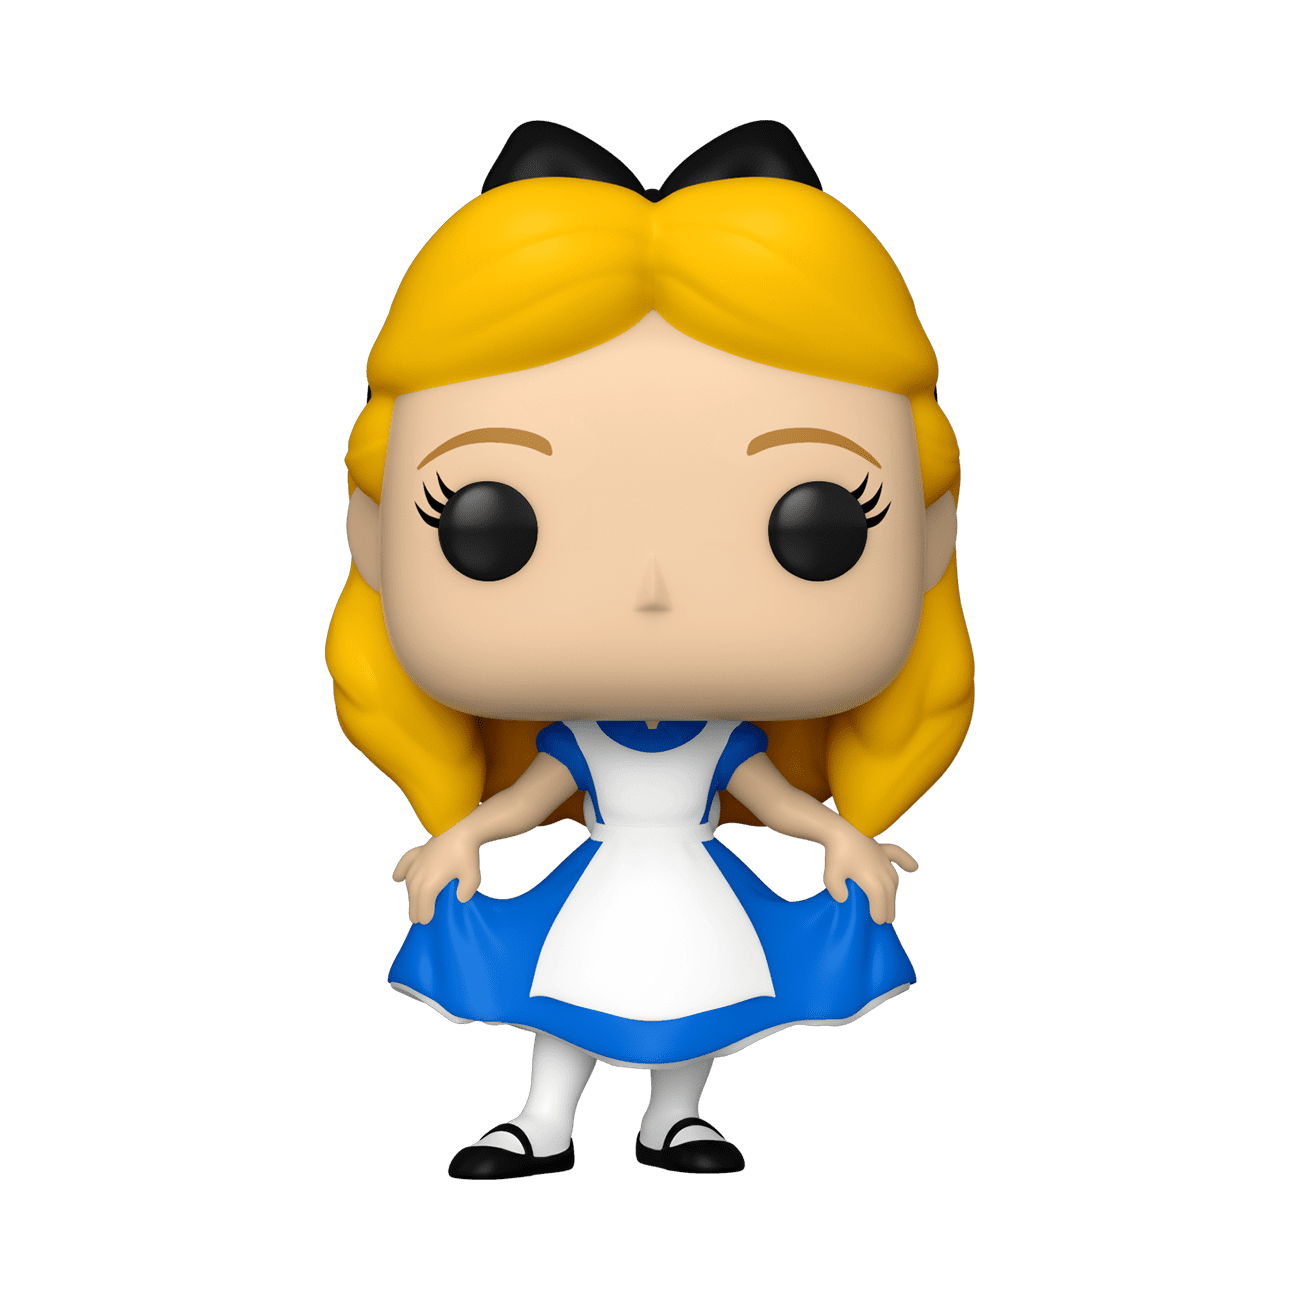 Funko Pop! Disney Alice in Wonderland 70th Anniversary Alice Curtsying –  Blueberry Cat